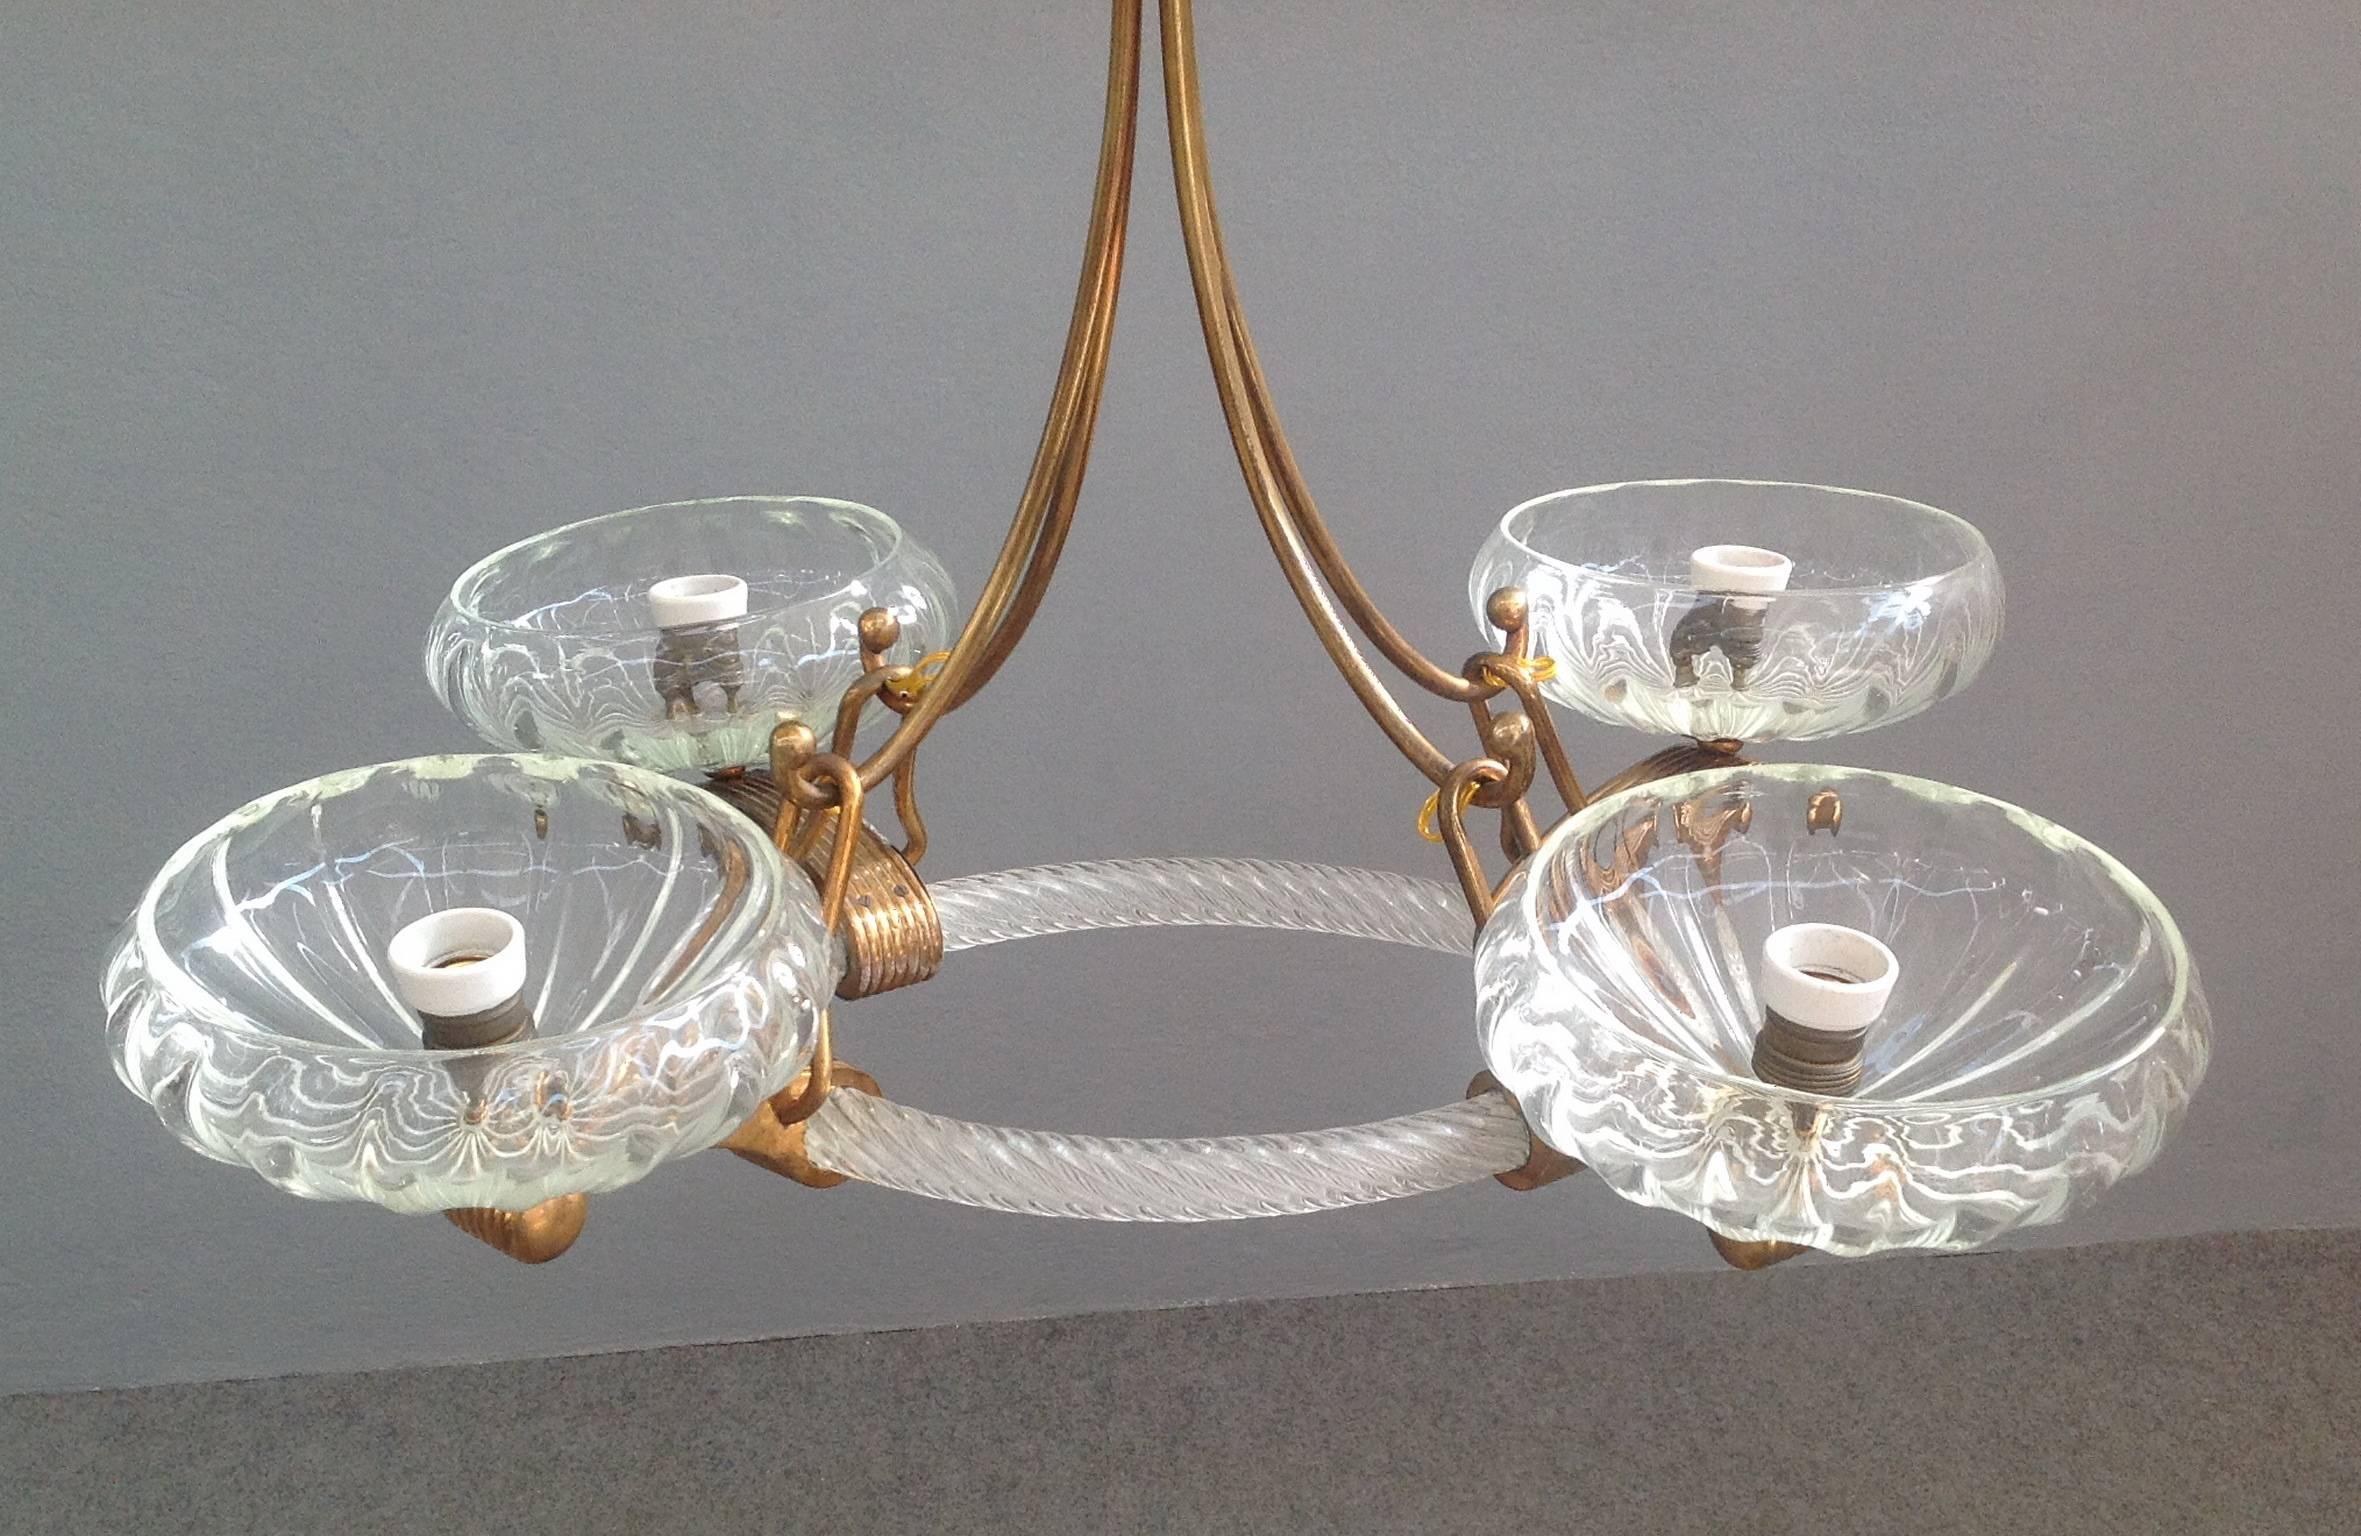 Stunning chandelier attributed to Barovier.
Handblown Murano glass with rare brass details. Four lights.